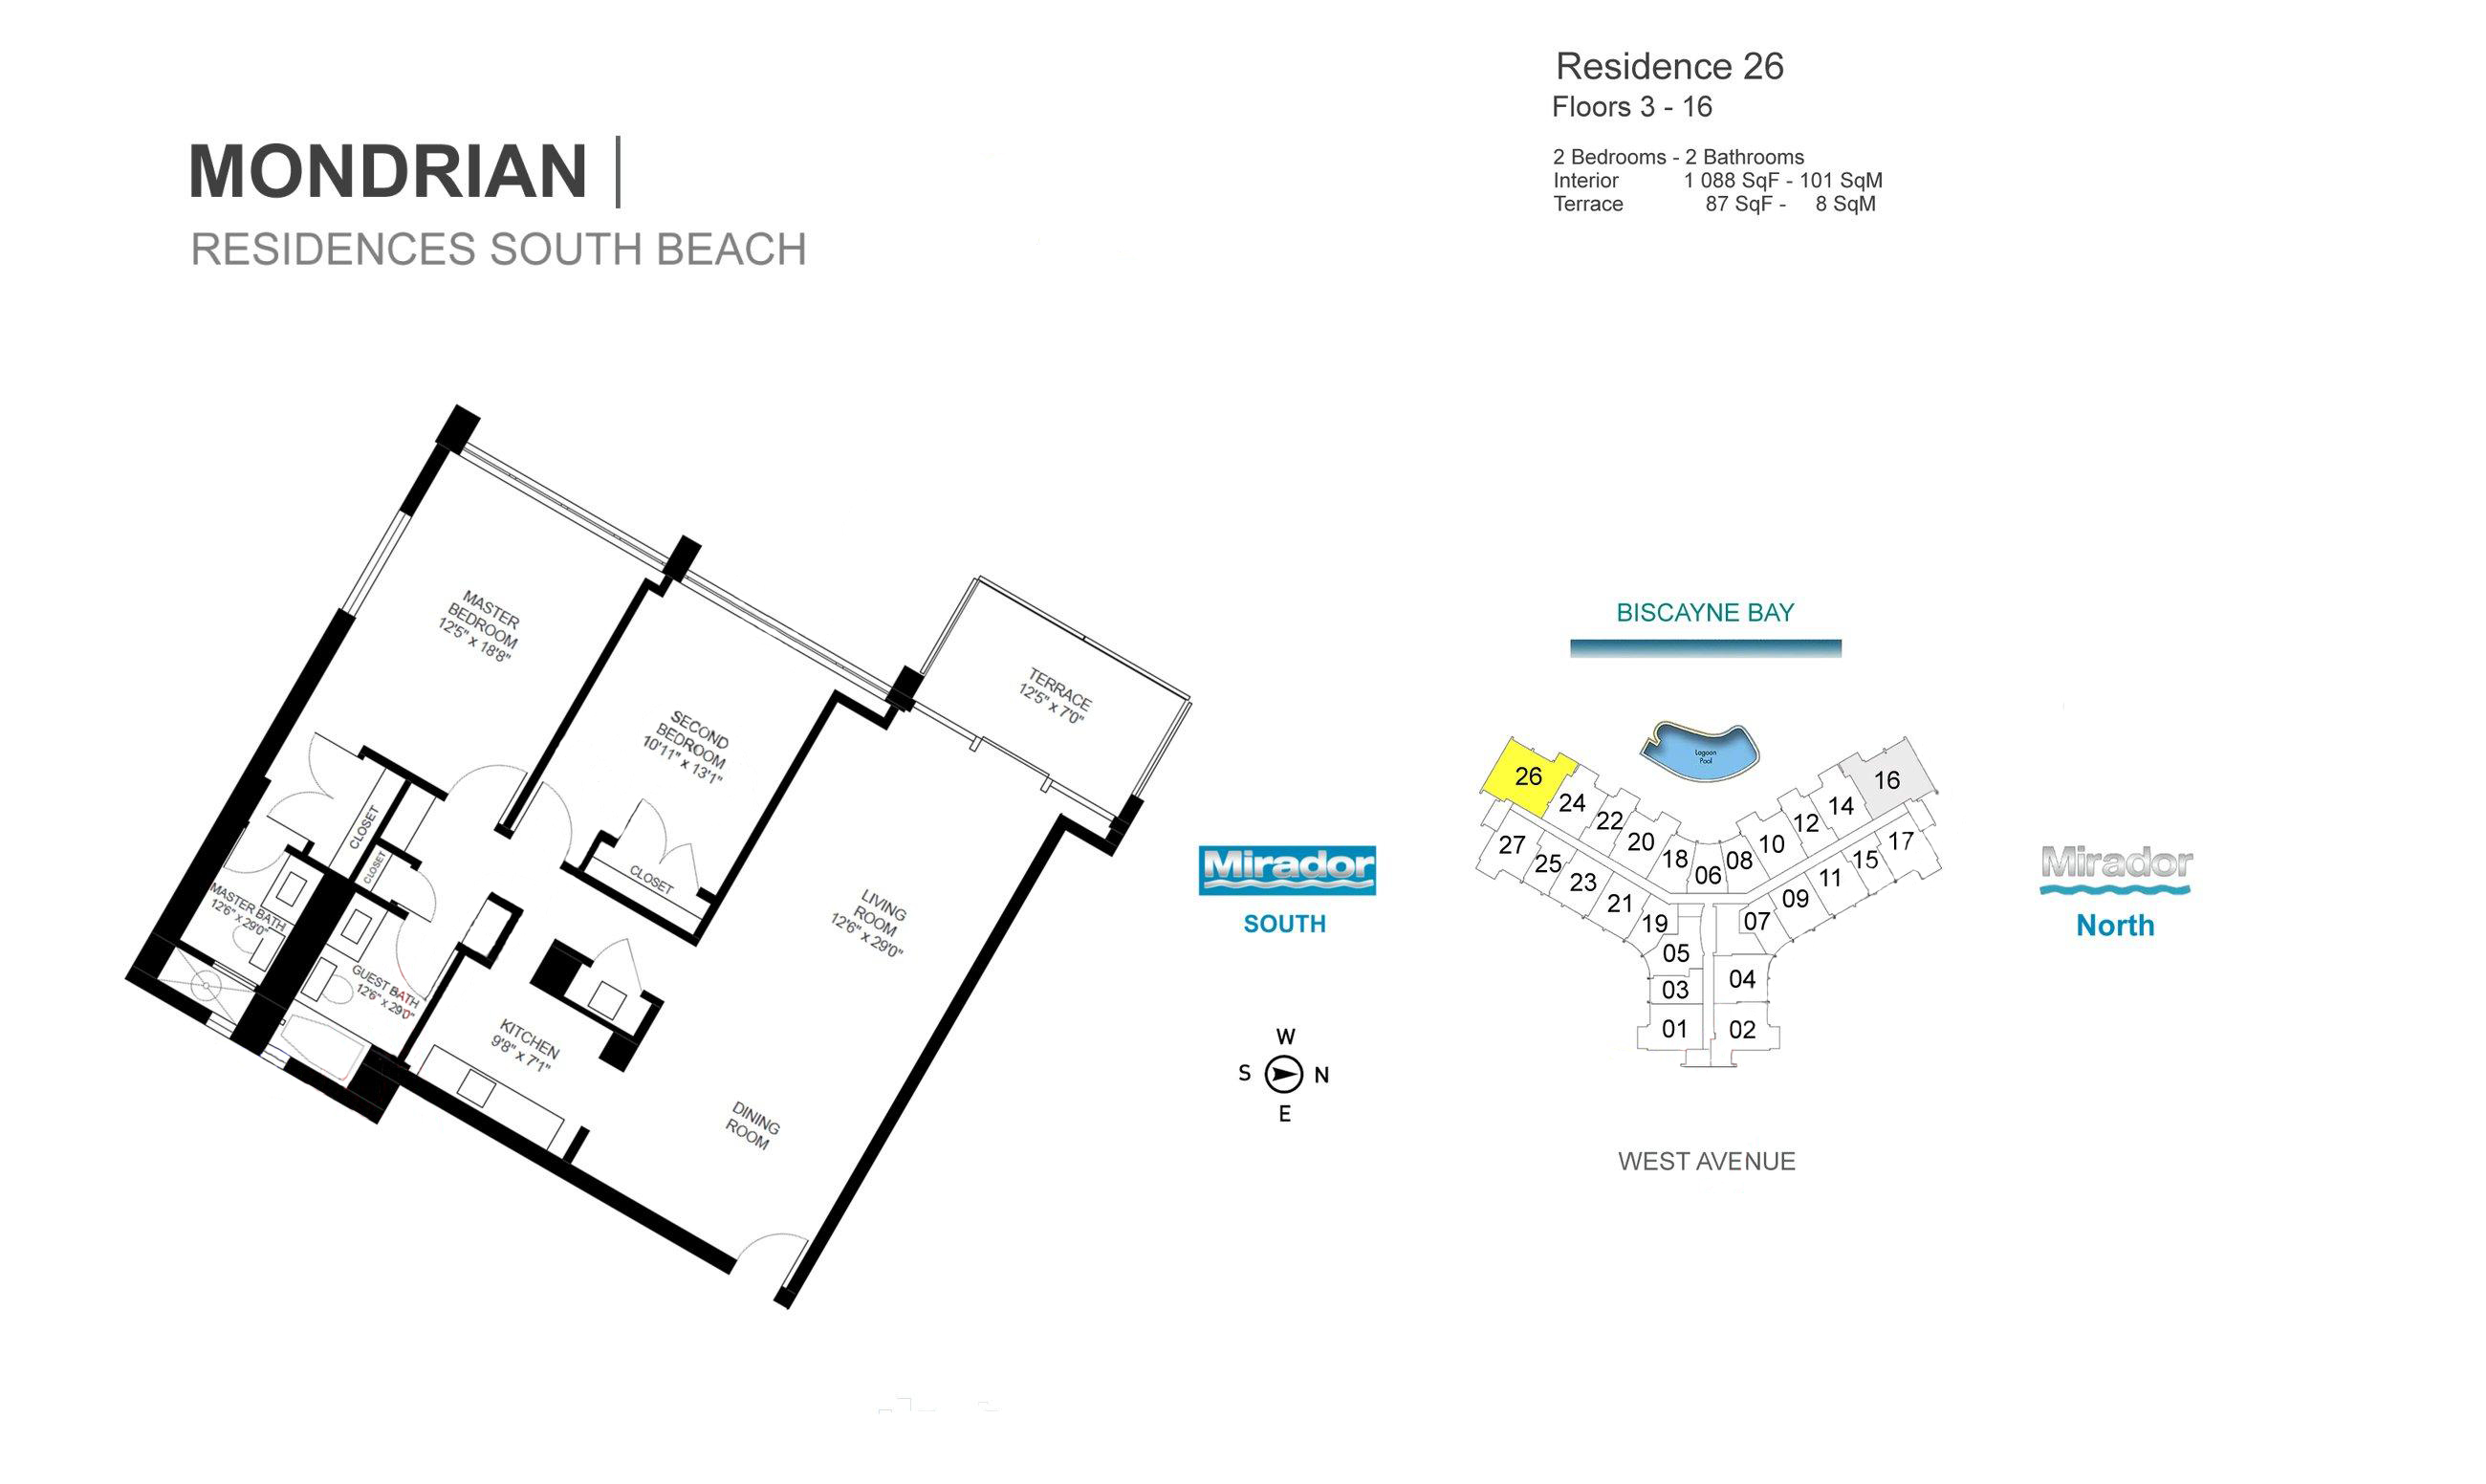 Mondrian South Beach Residence 26